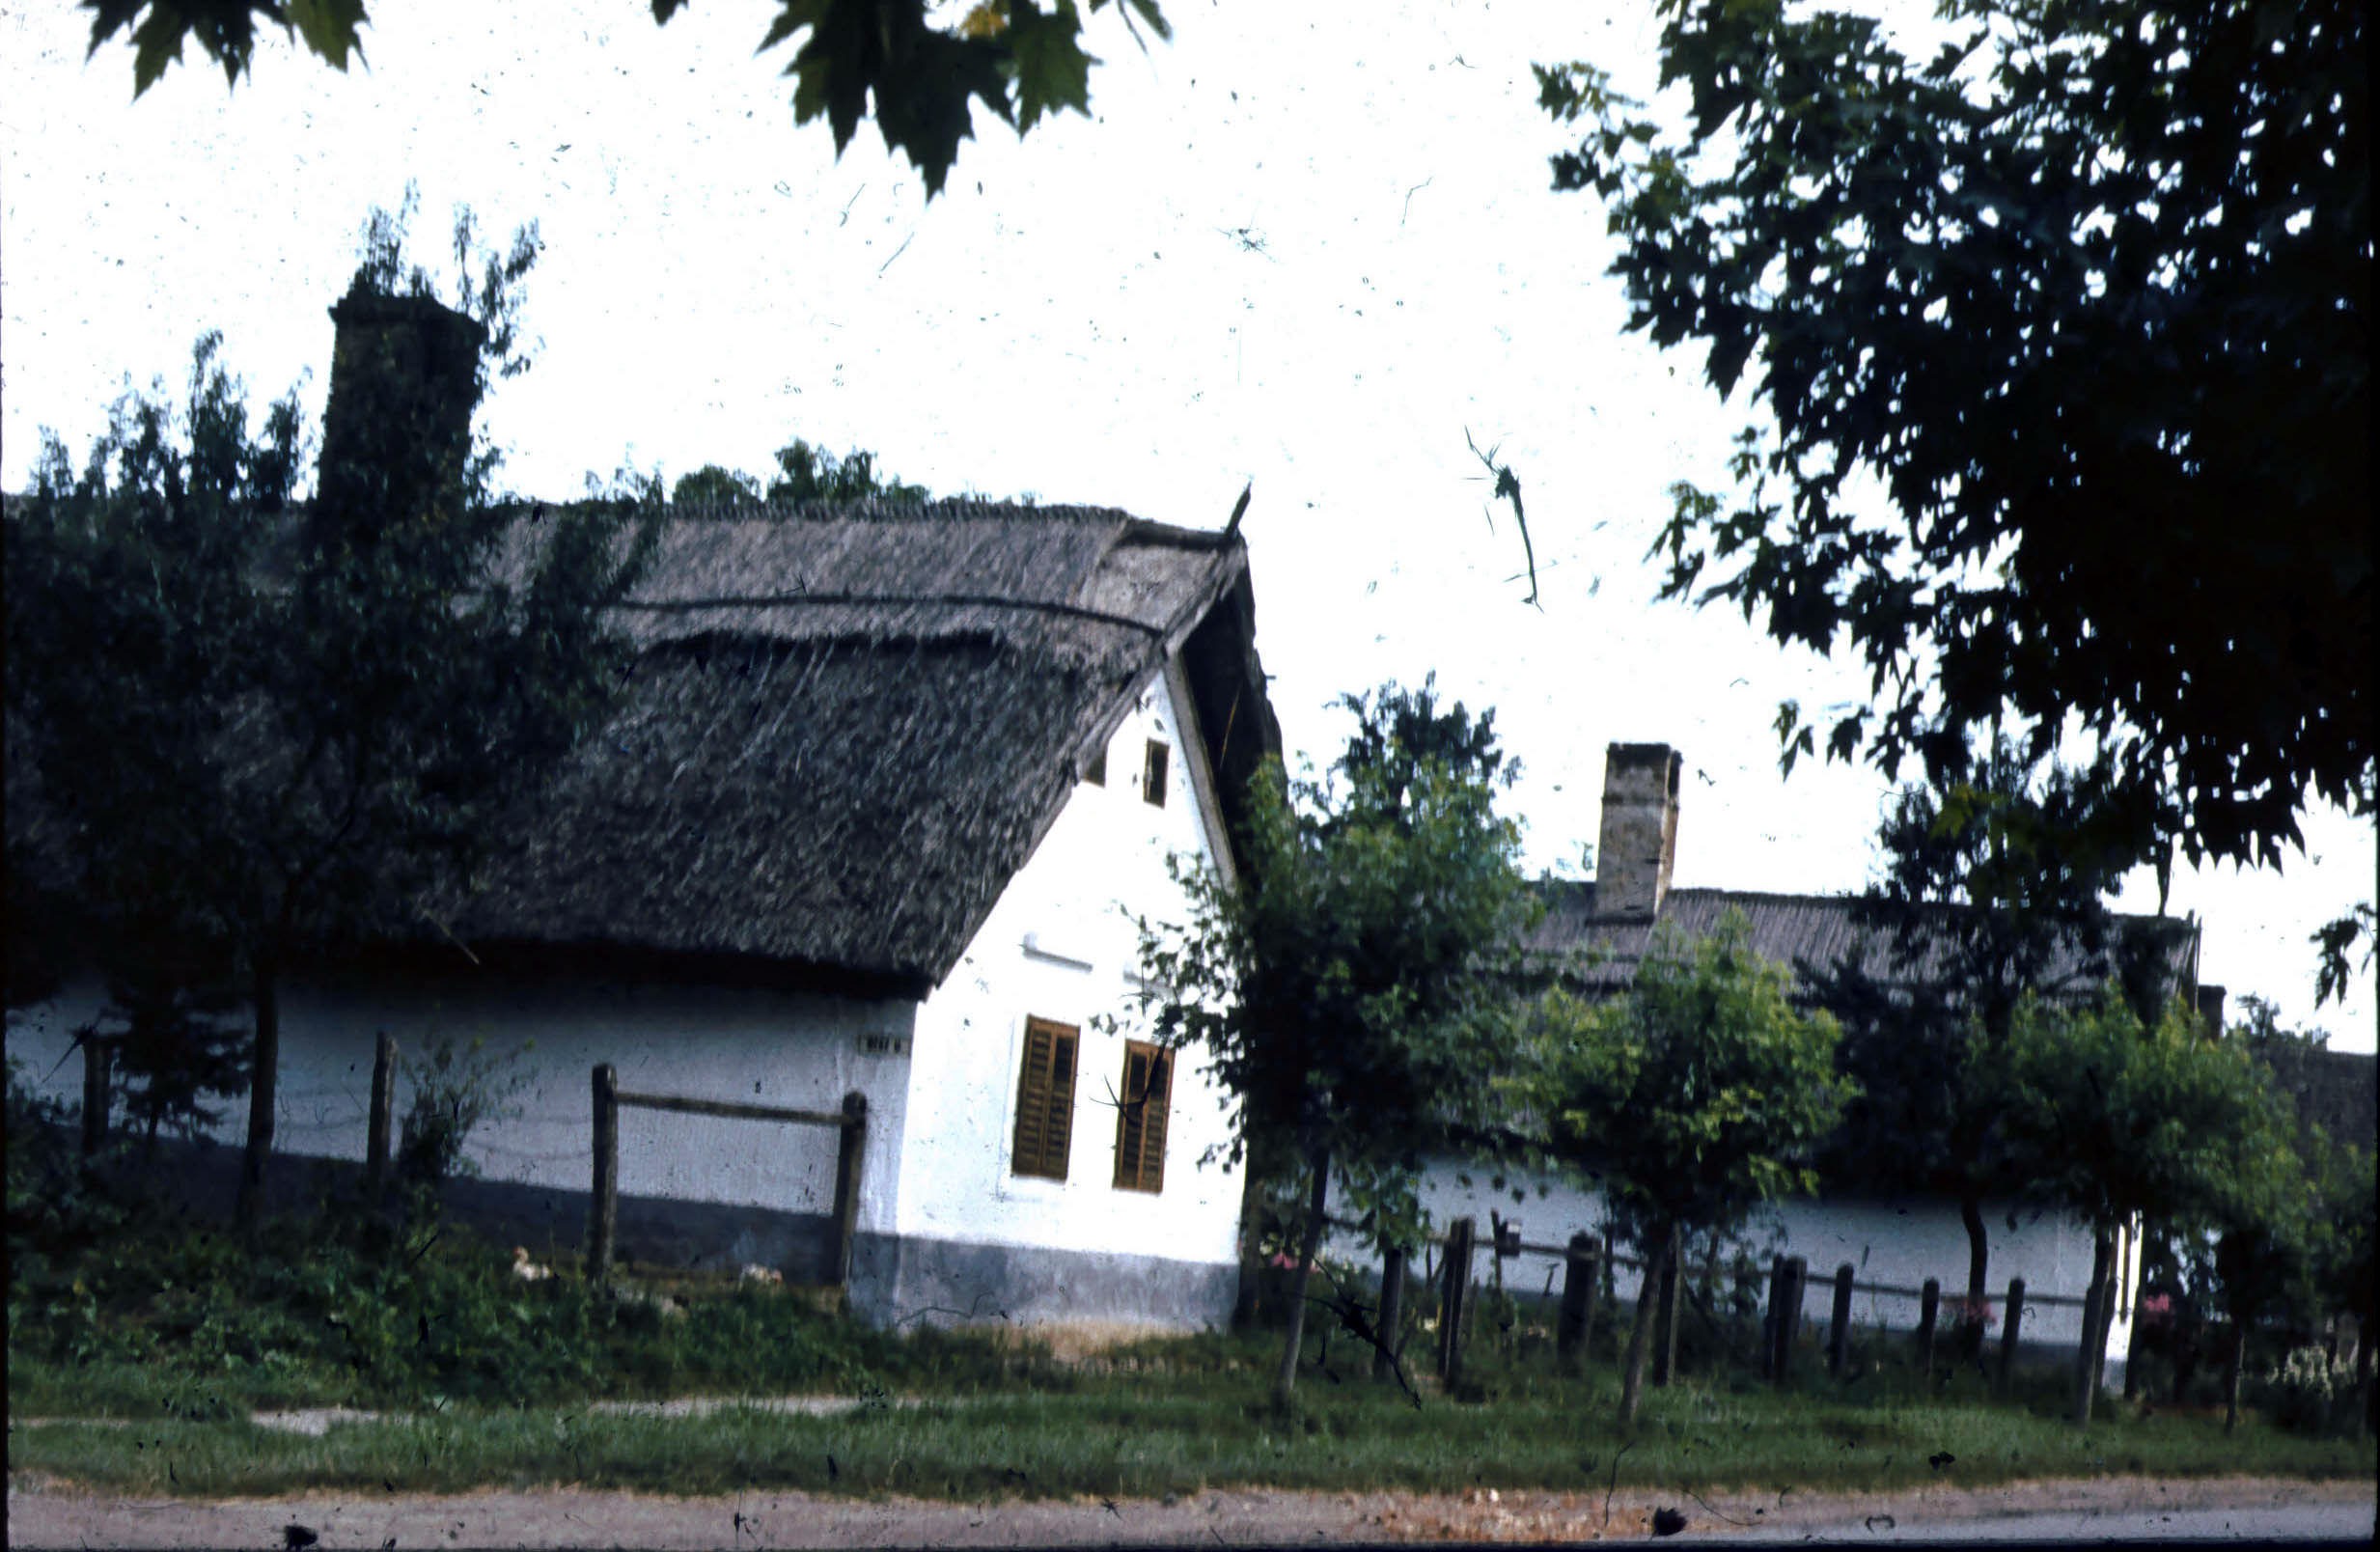 Lakóházak (Rippl-Rónai Múzeum CC BY-NC-ND)